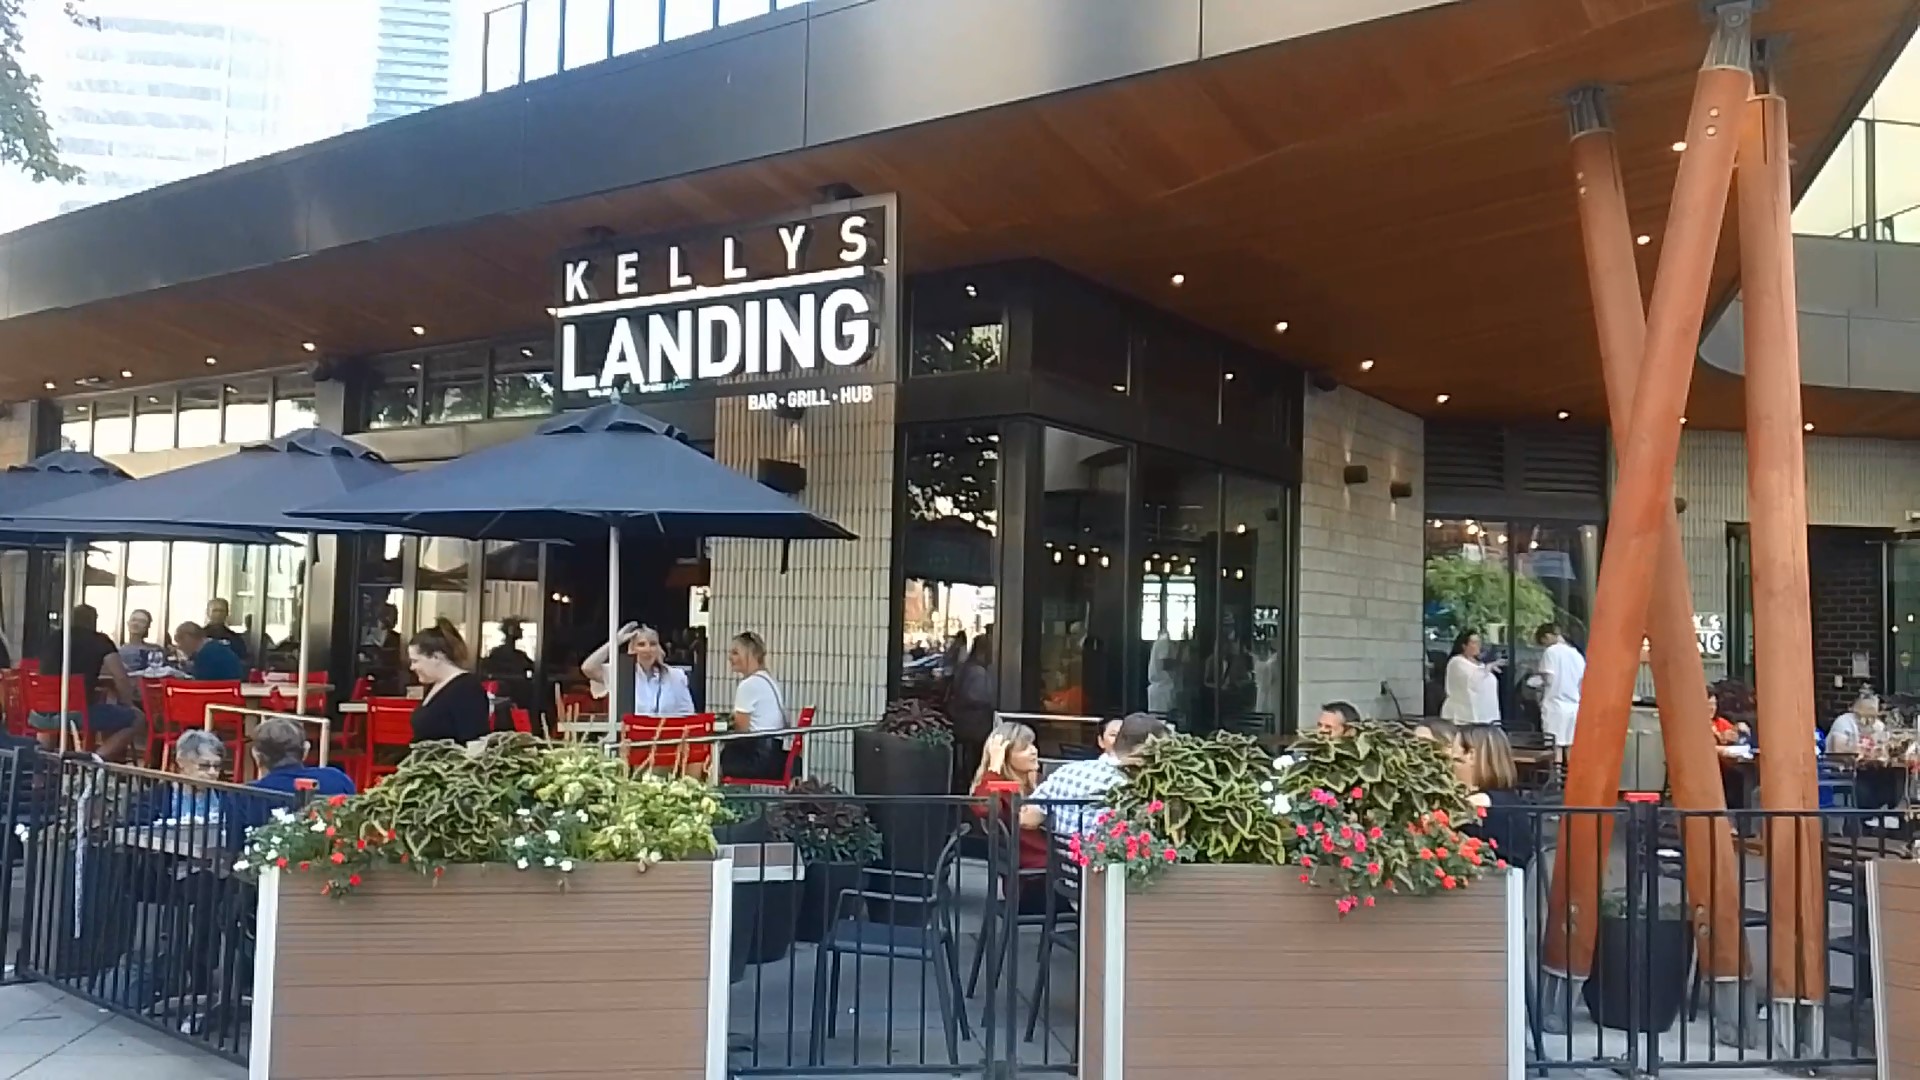 Kelly's landing